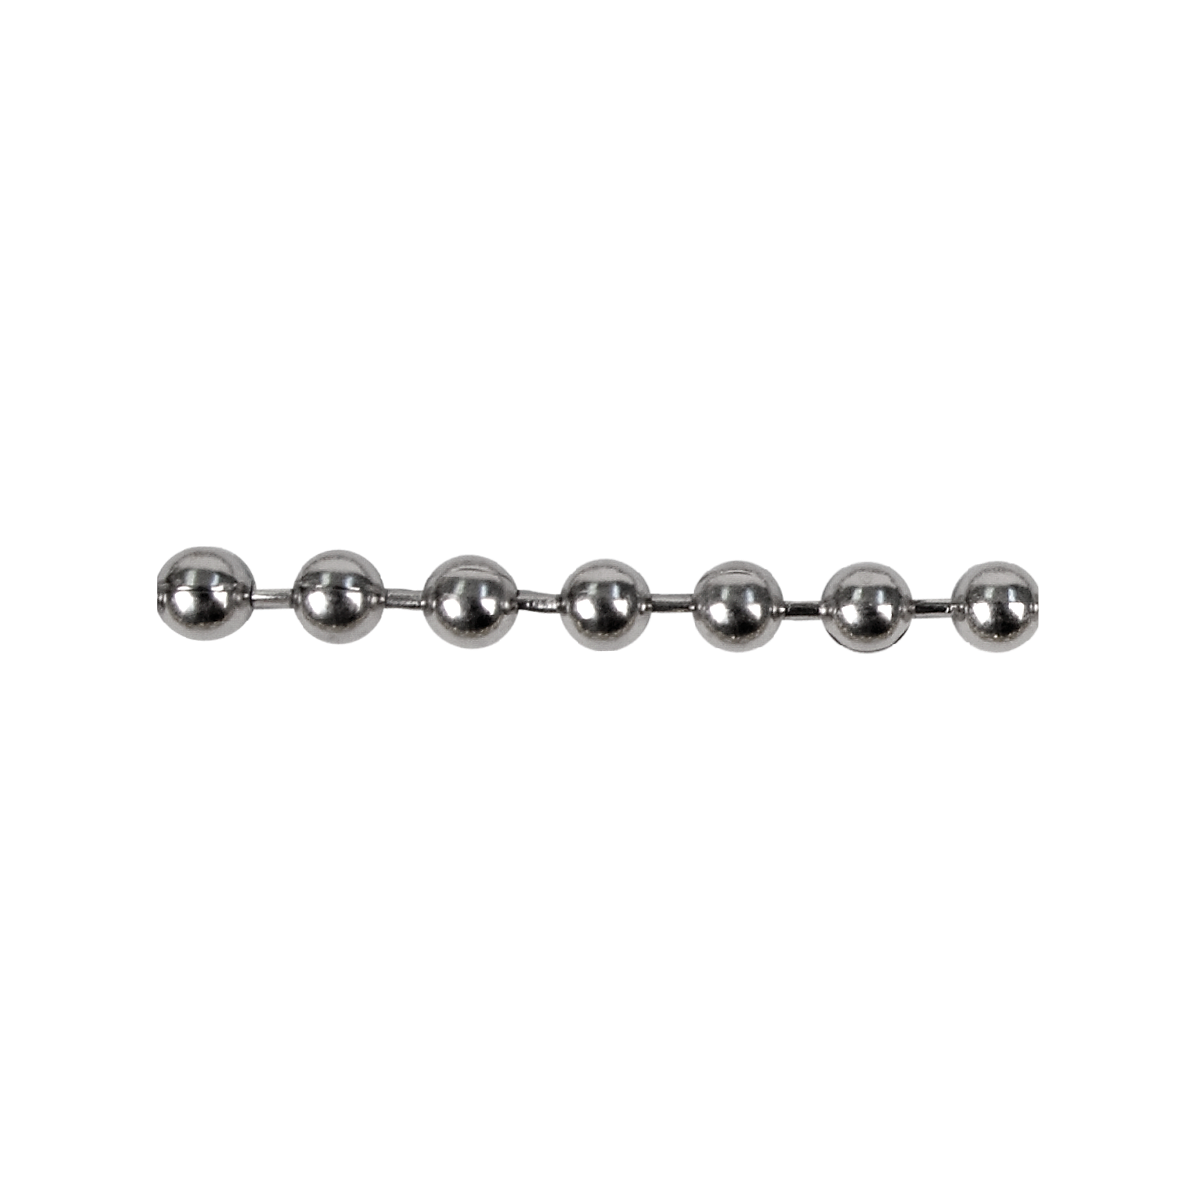 Metal Bead Chain #10, Nickel, 500